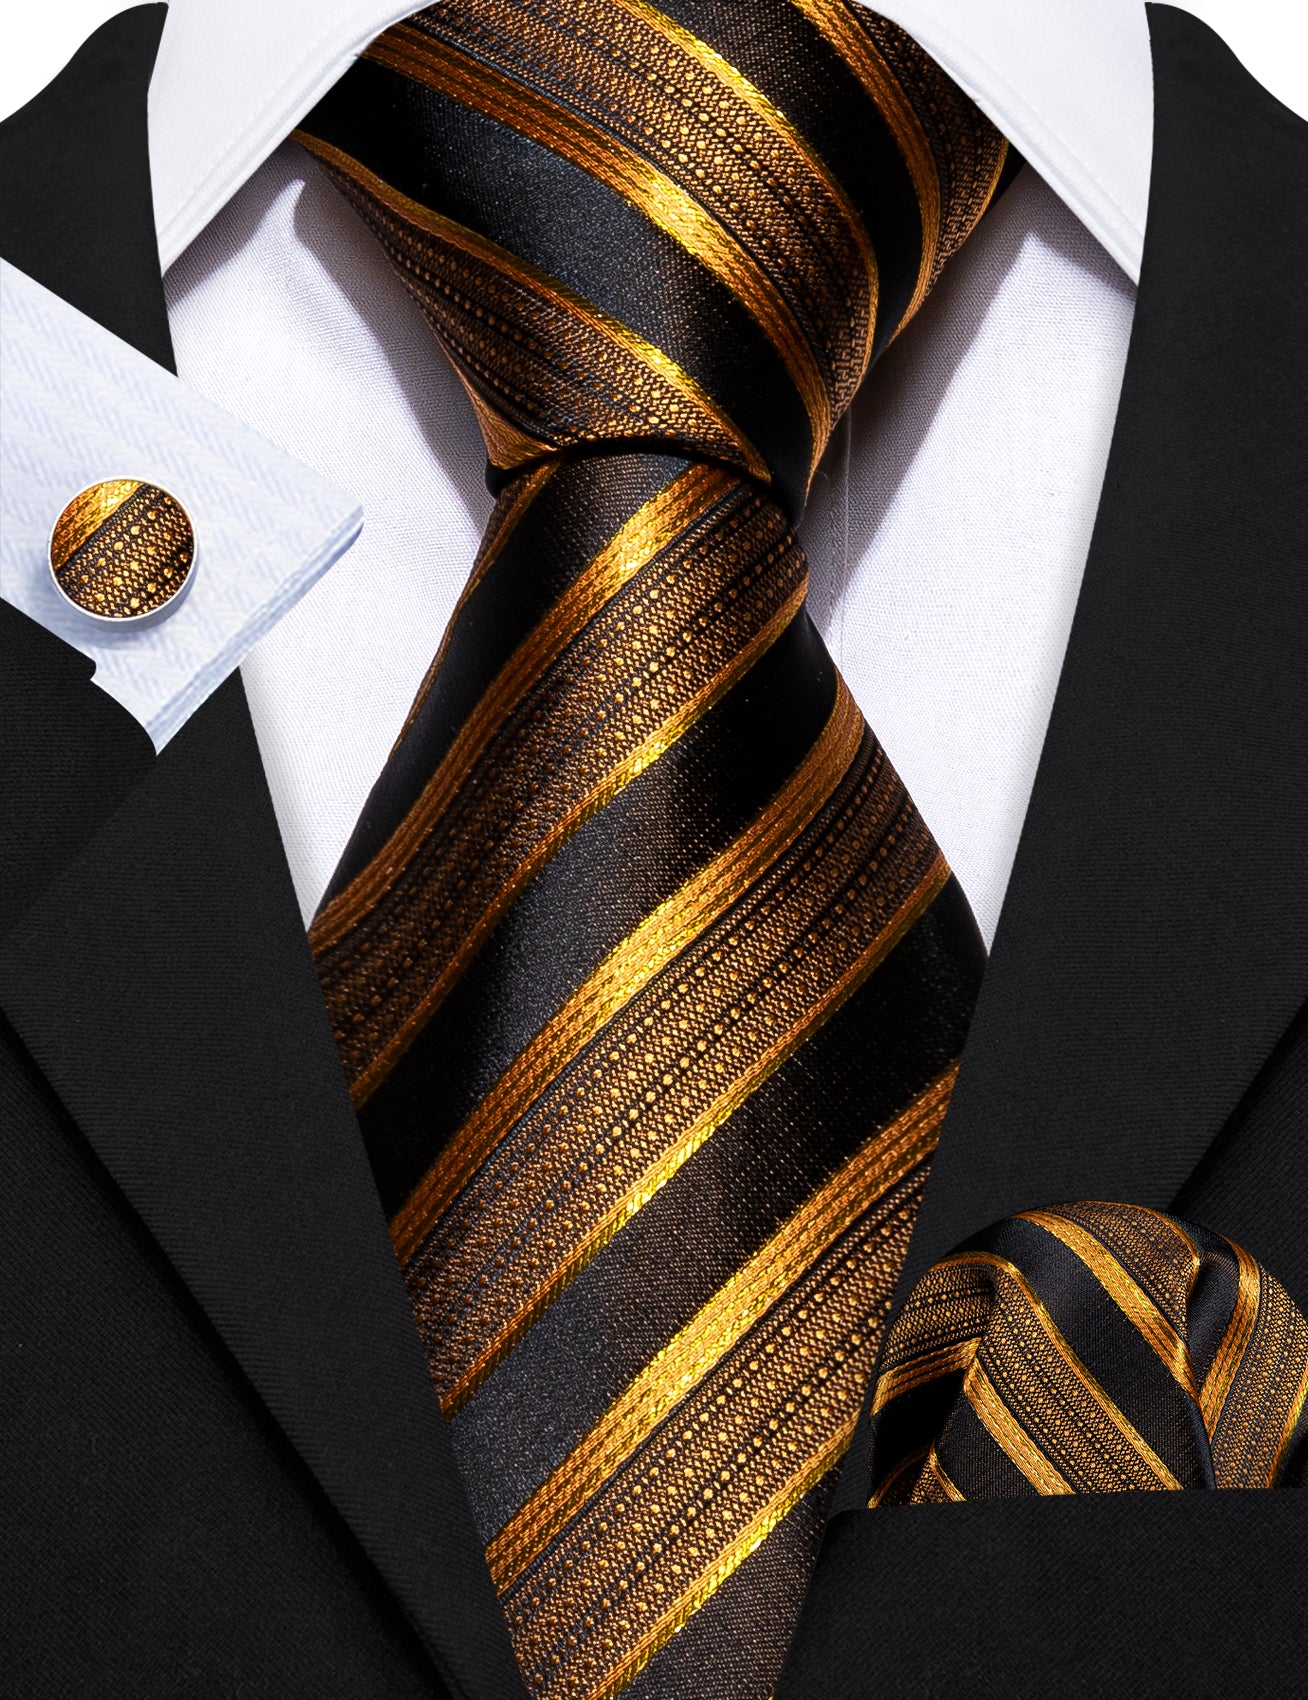 Barry.wang Black Tie Gold Striped Silk Tie Handkerchief Cufflinks Set